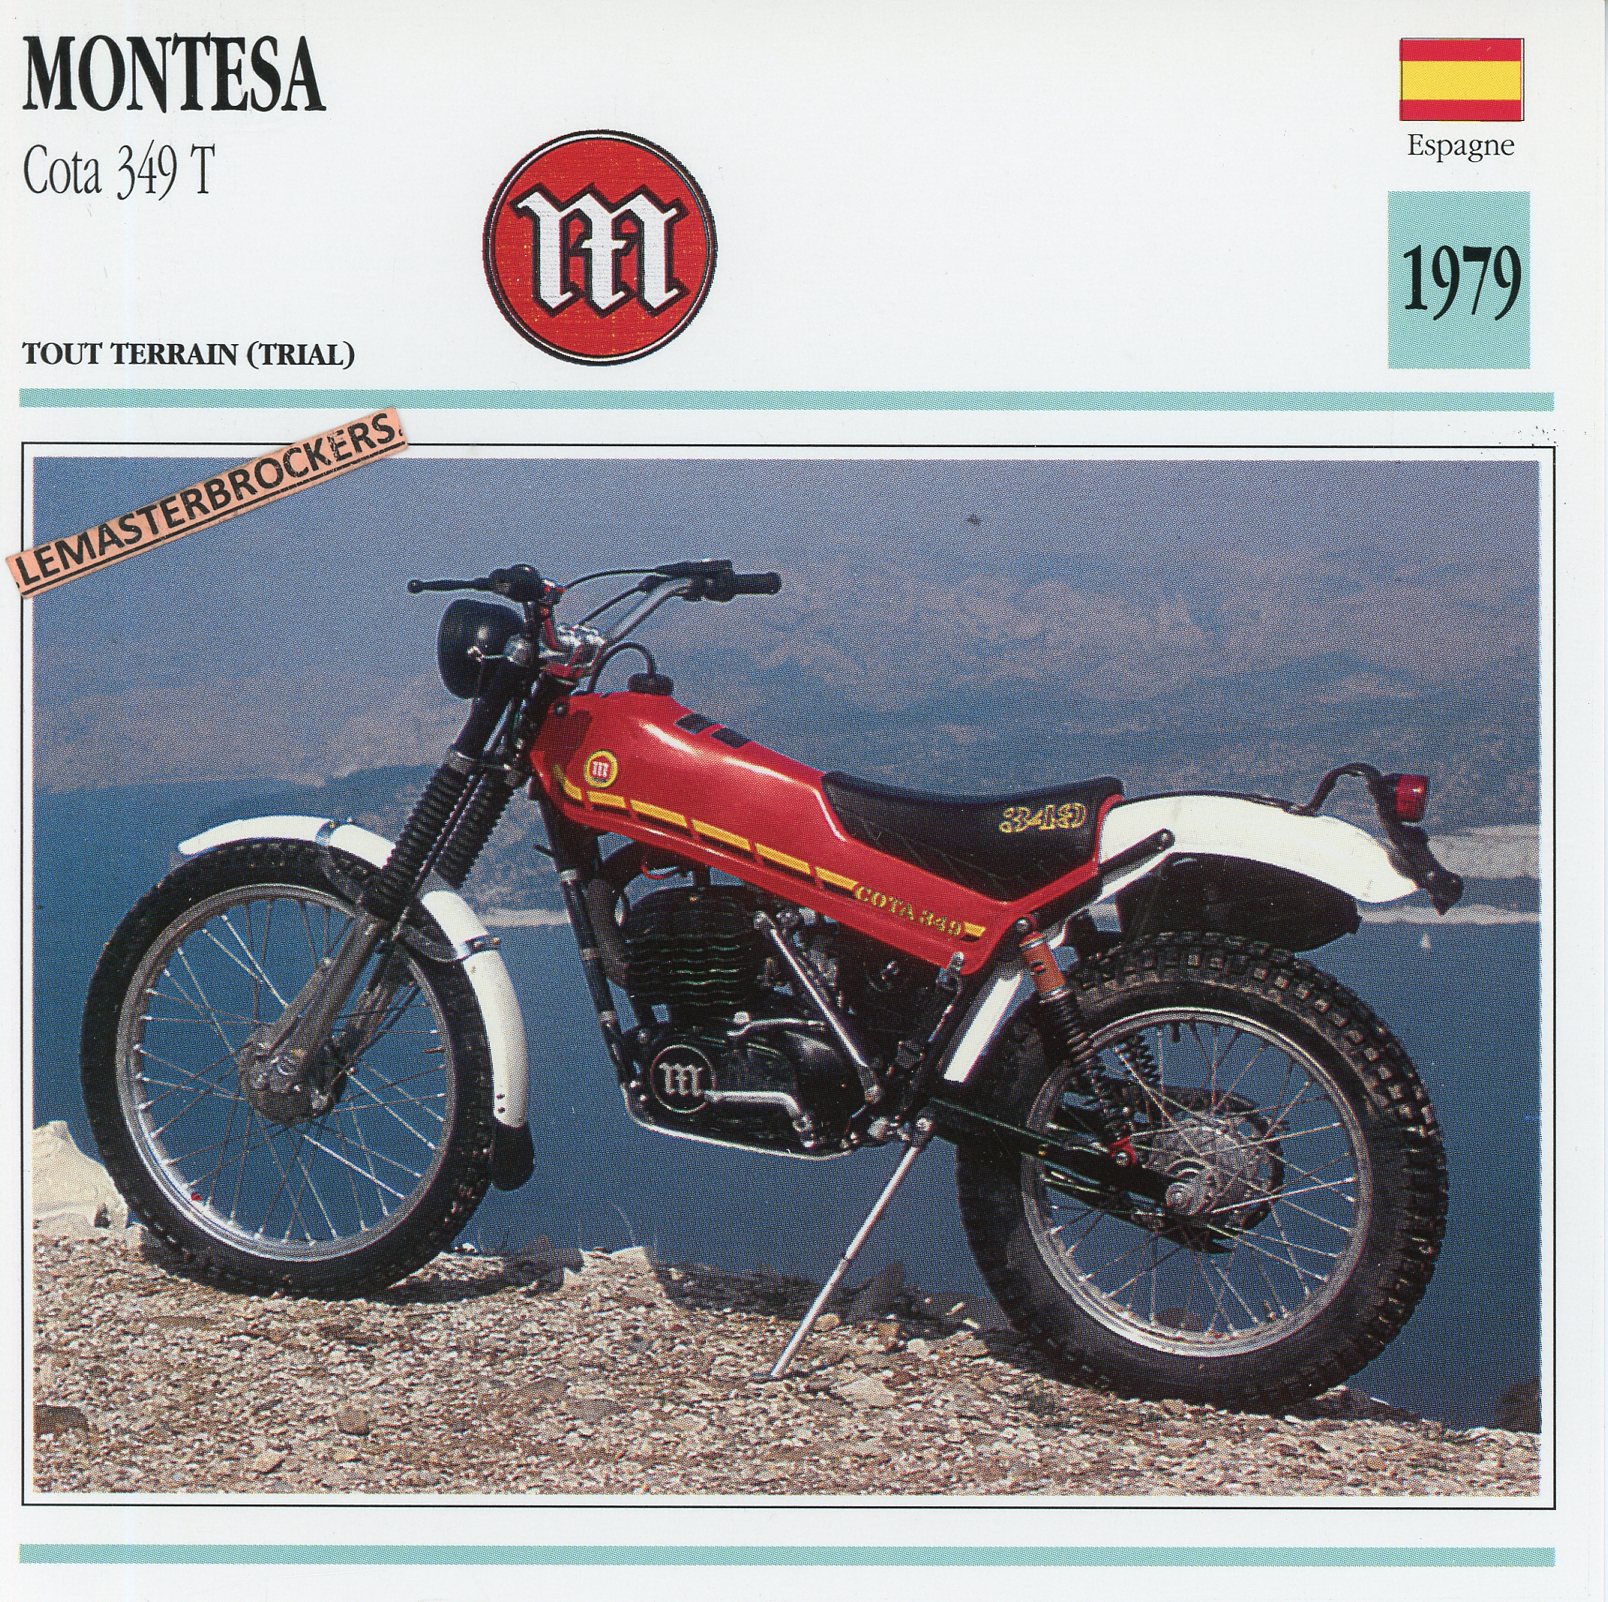 MONTESA-COTA-349-T-1979-CARTE-FICHE-MOTO-TRIAL-LEMASTERBROCKERS